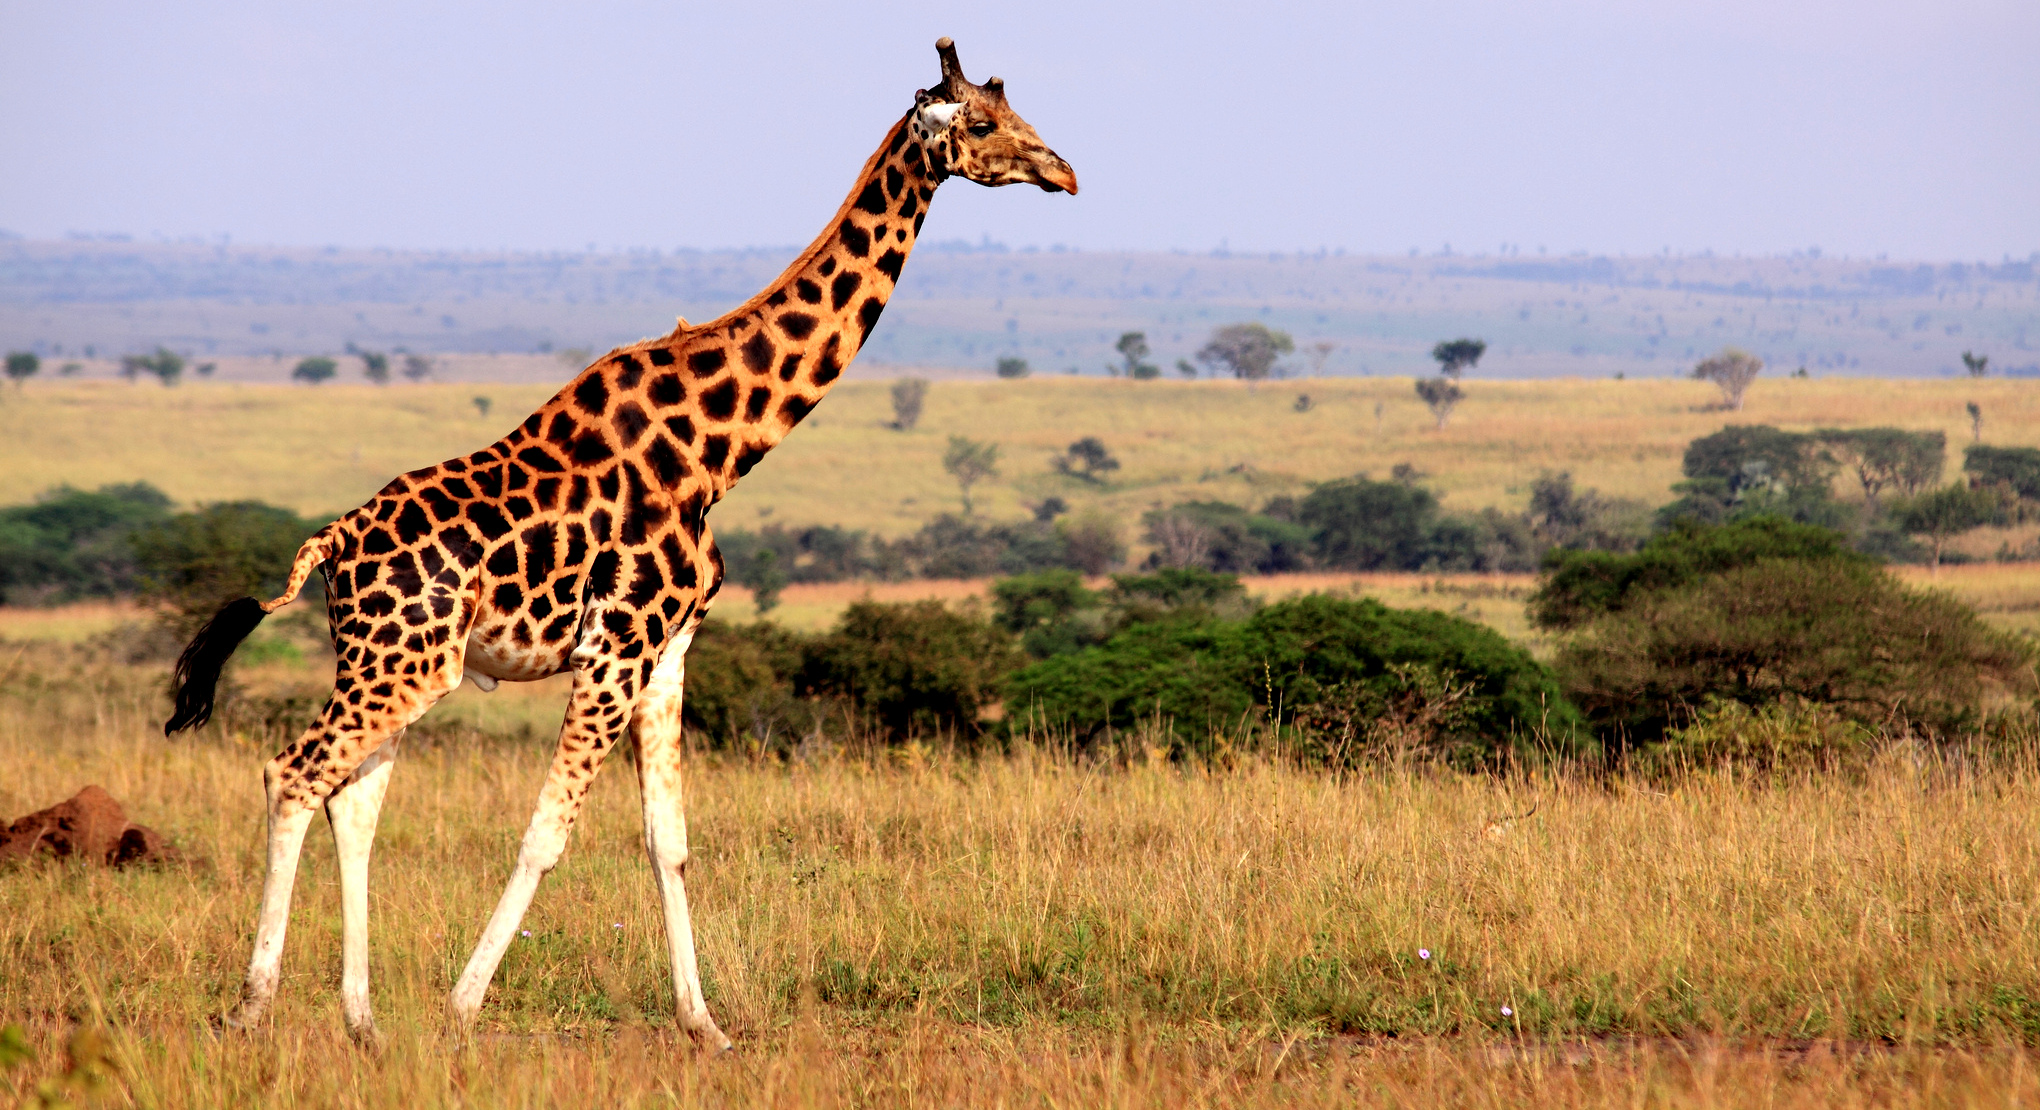 Facts about Giraffes